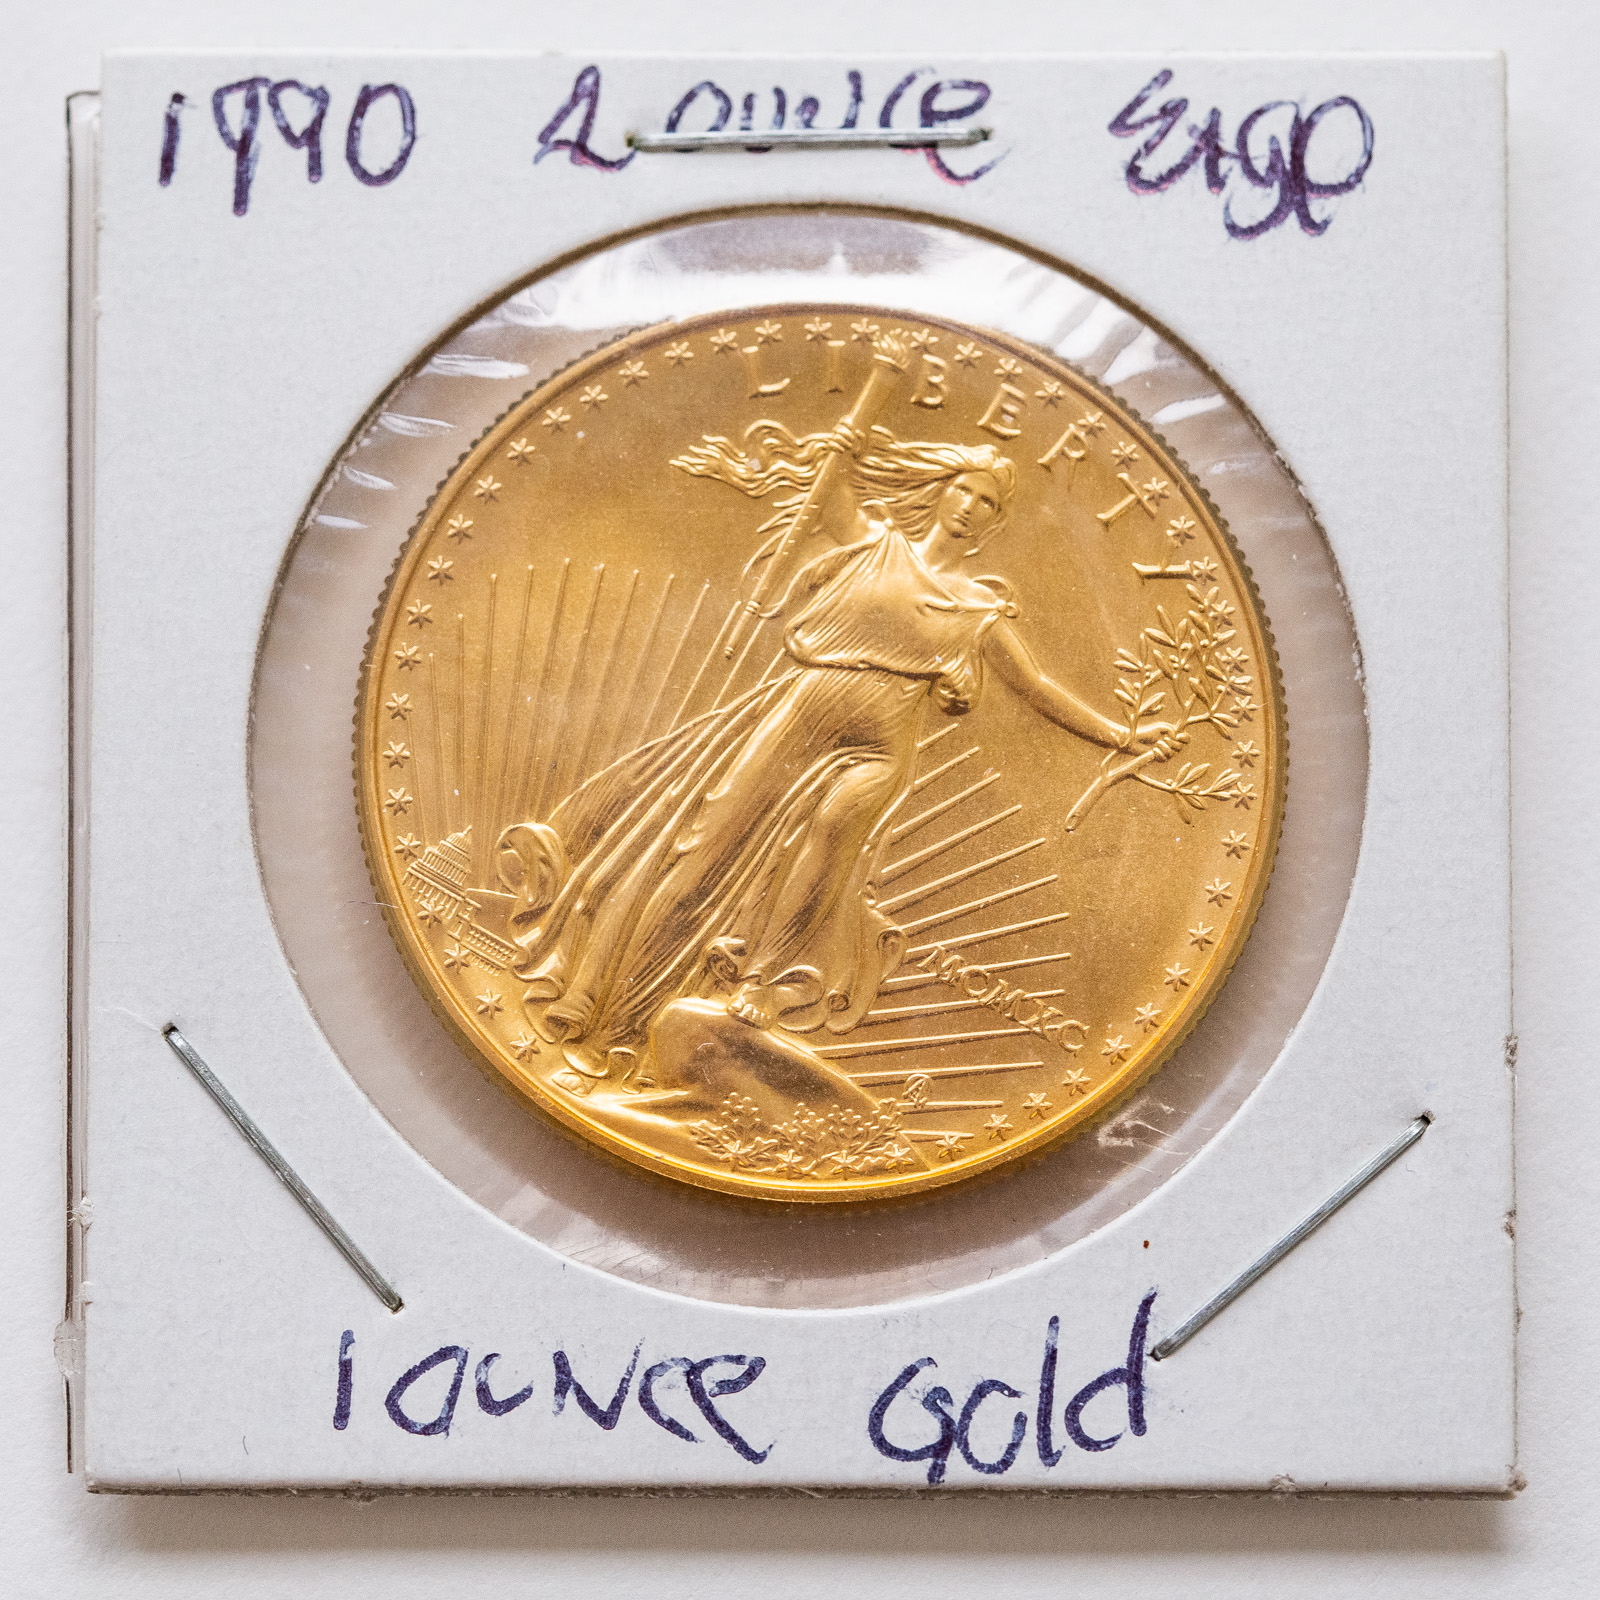 1990 1 OUNCE GOLD AMERICAN EAGLE 337cbb